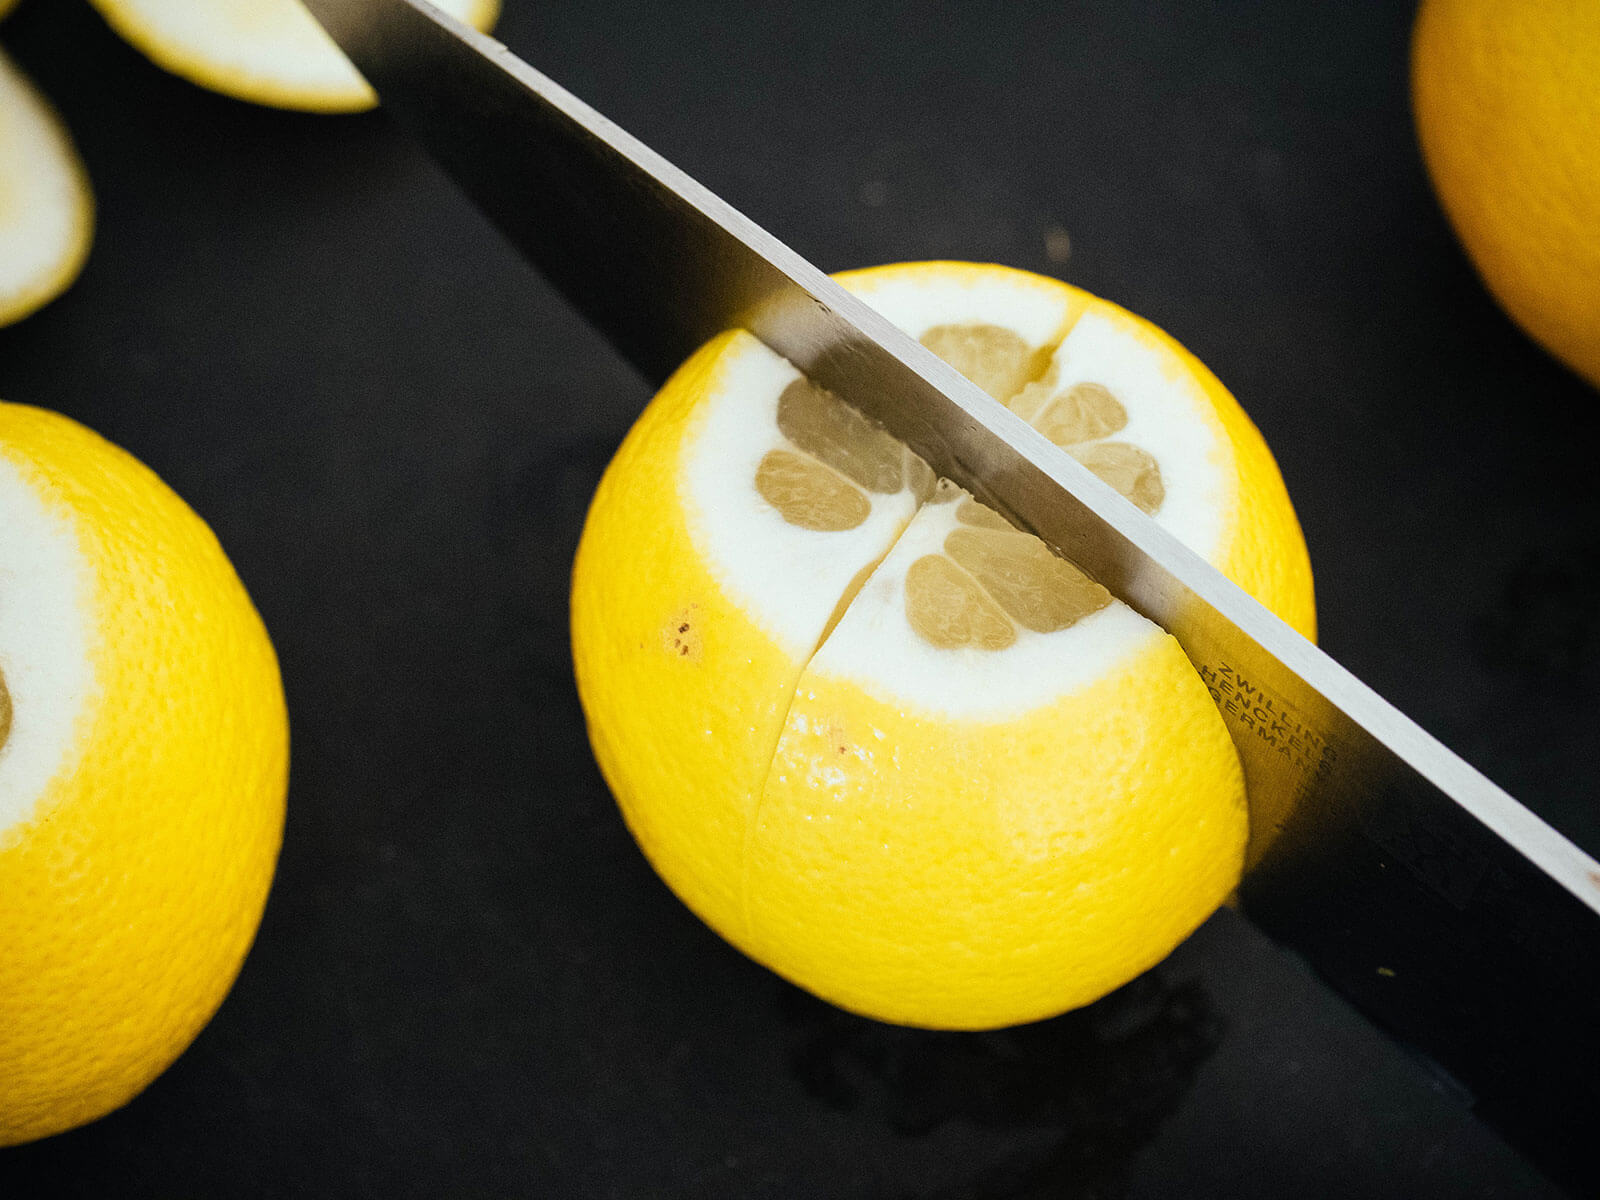 A knife slicing a lemon into quarters